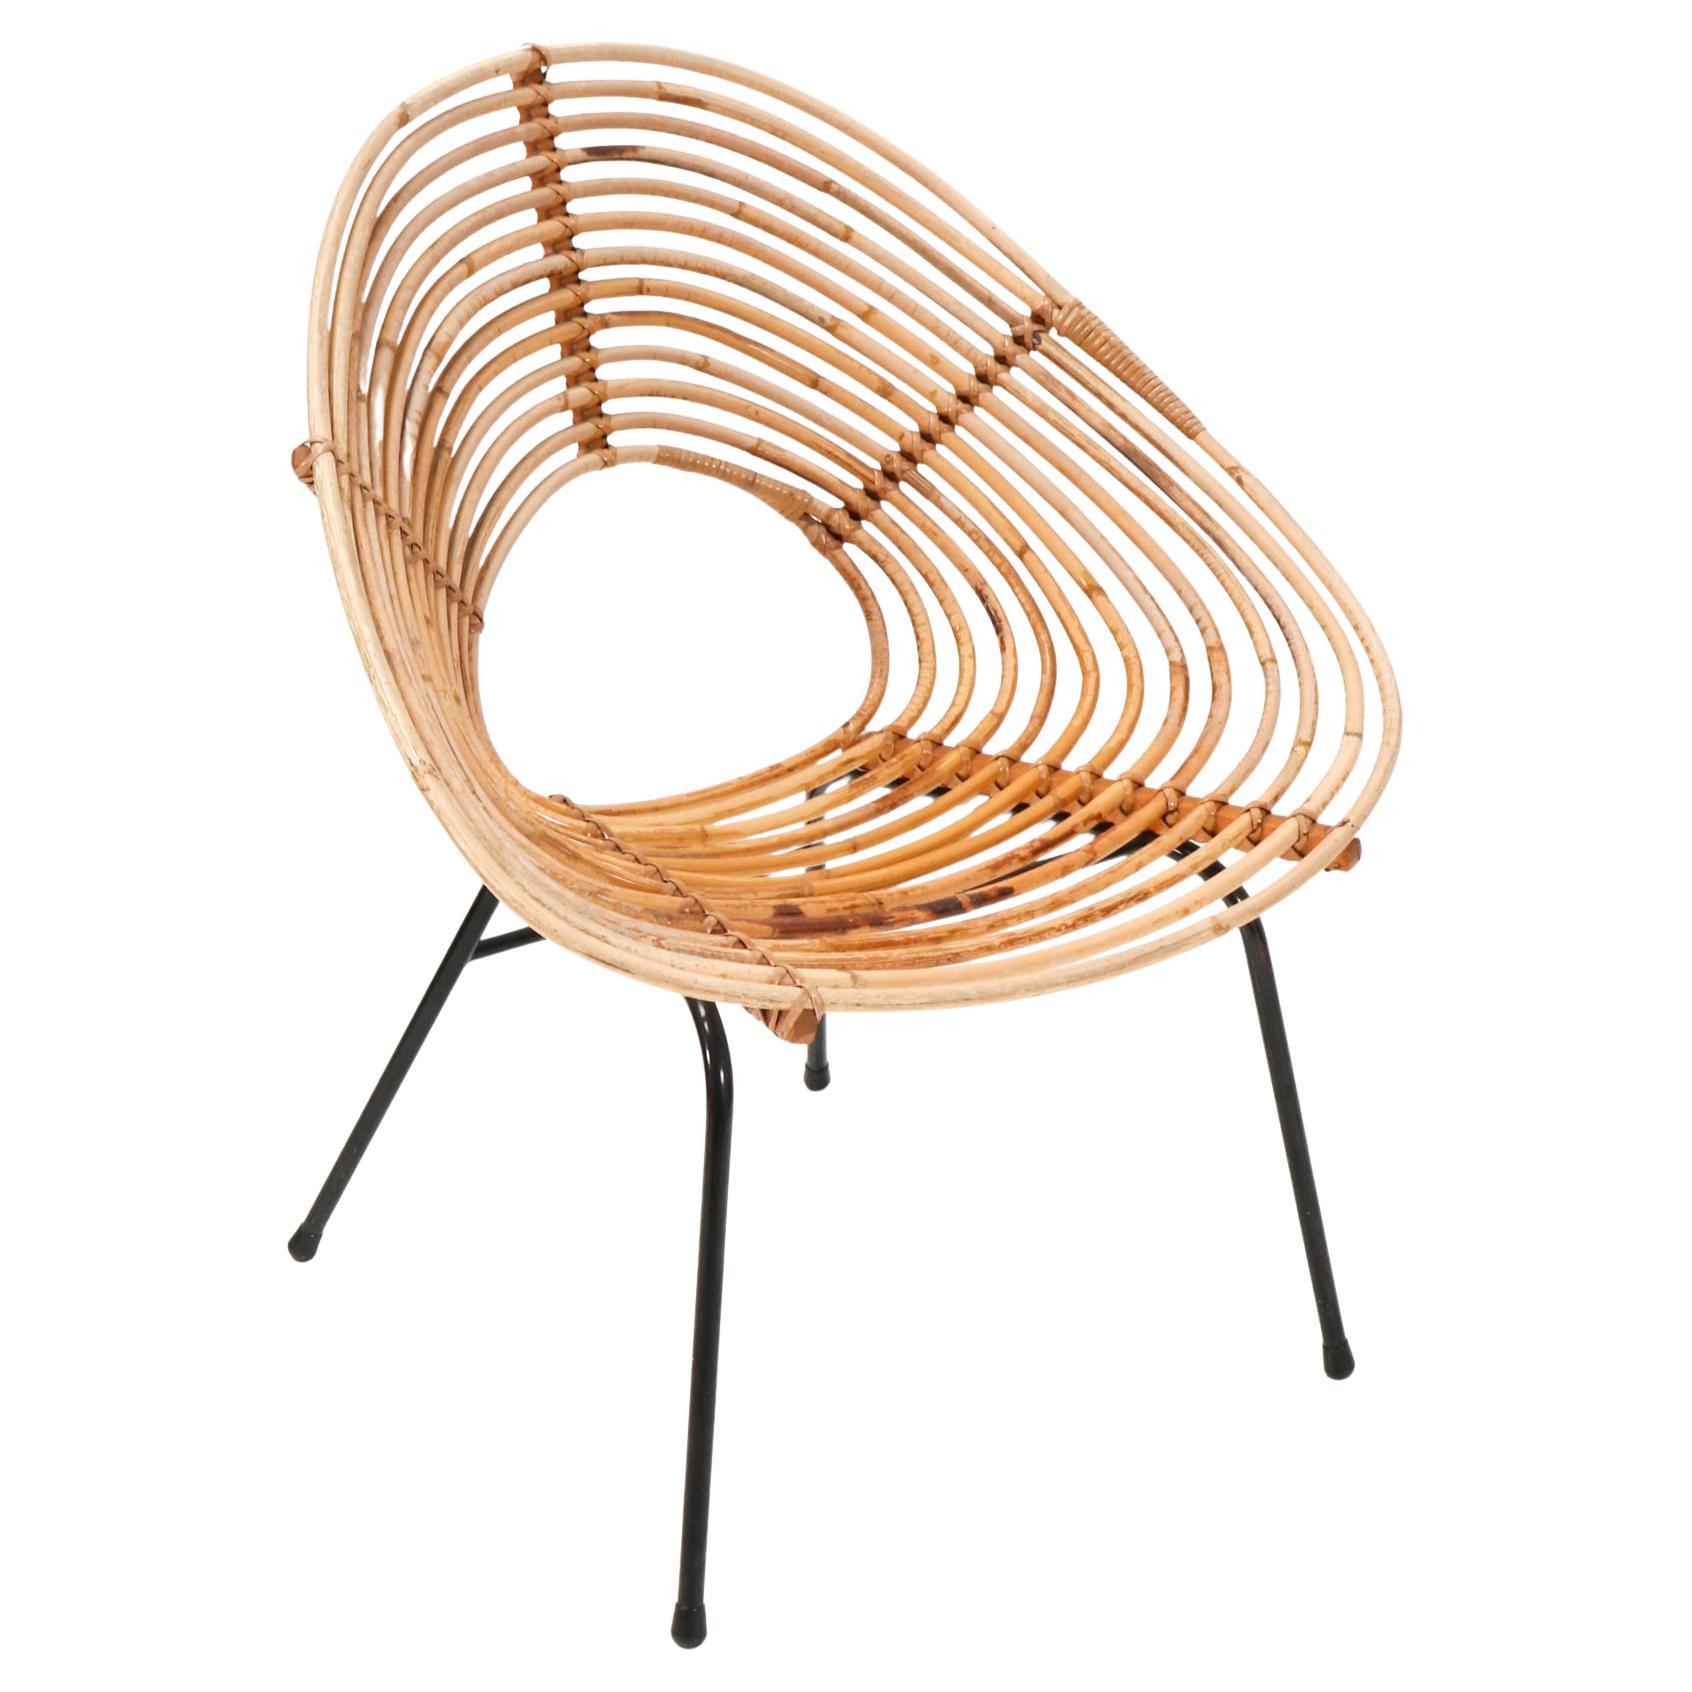 Rattan Mid-Century Modern Lounge Chair by Dirk van Sliedregt for Rohe, 1950s